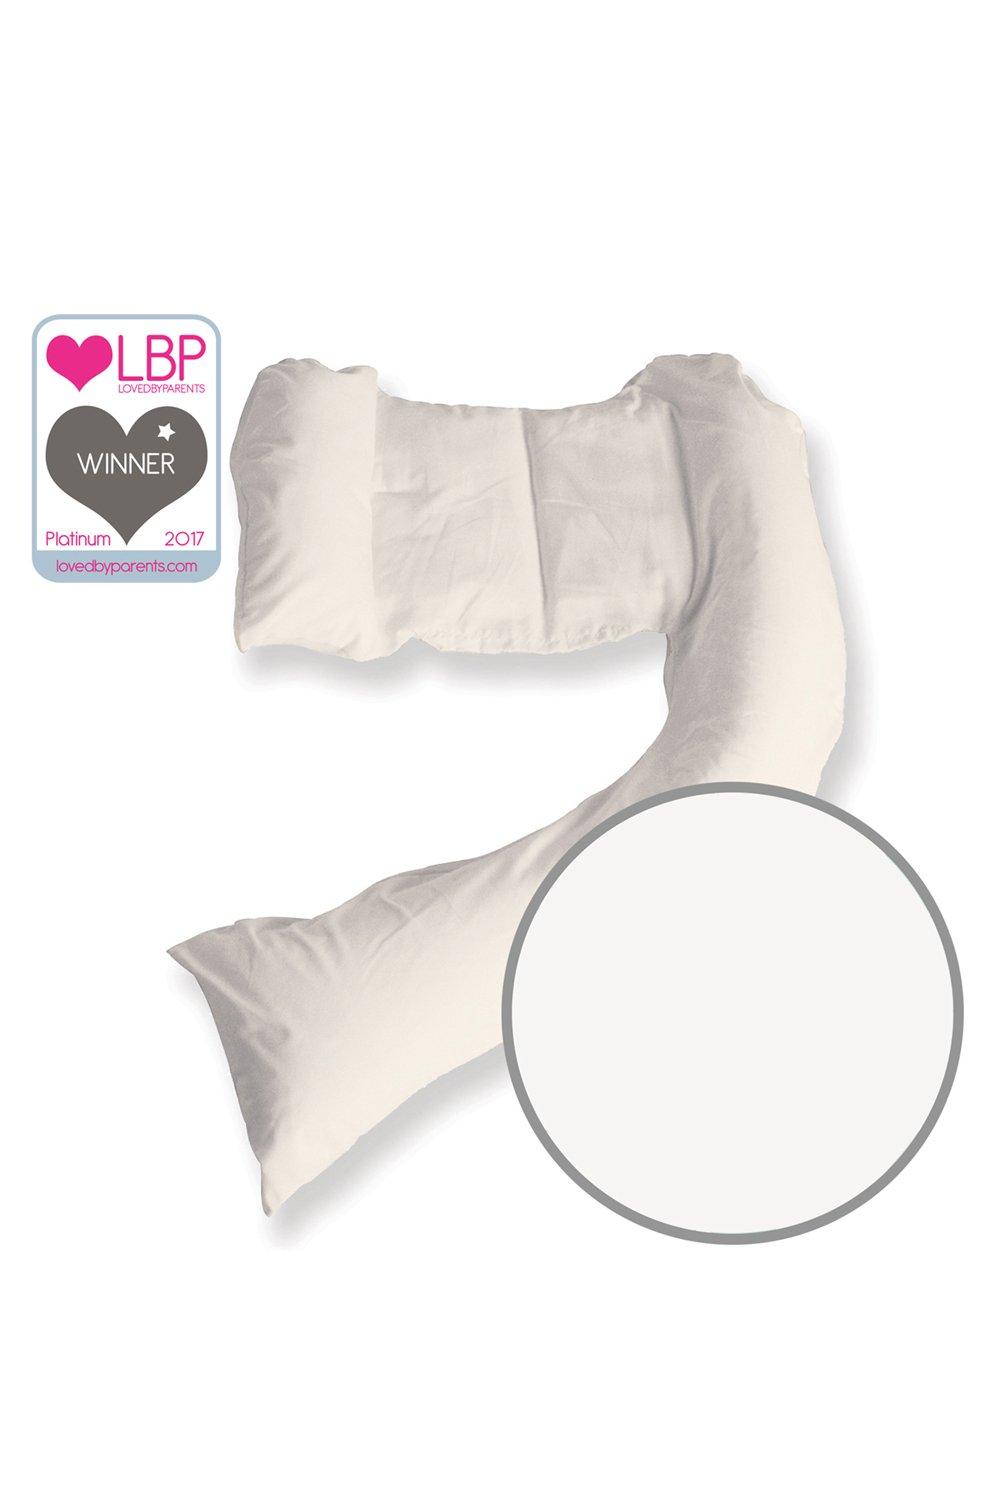 Dreamgenii Pregnancy Support & Feeding Pillow - White cotton